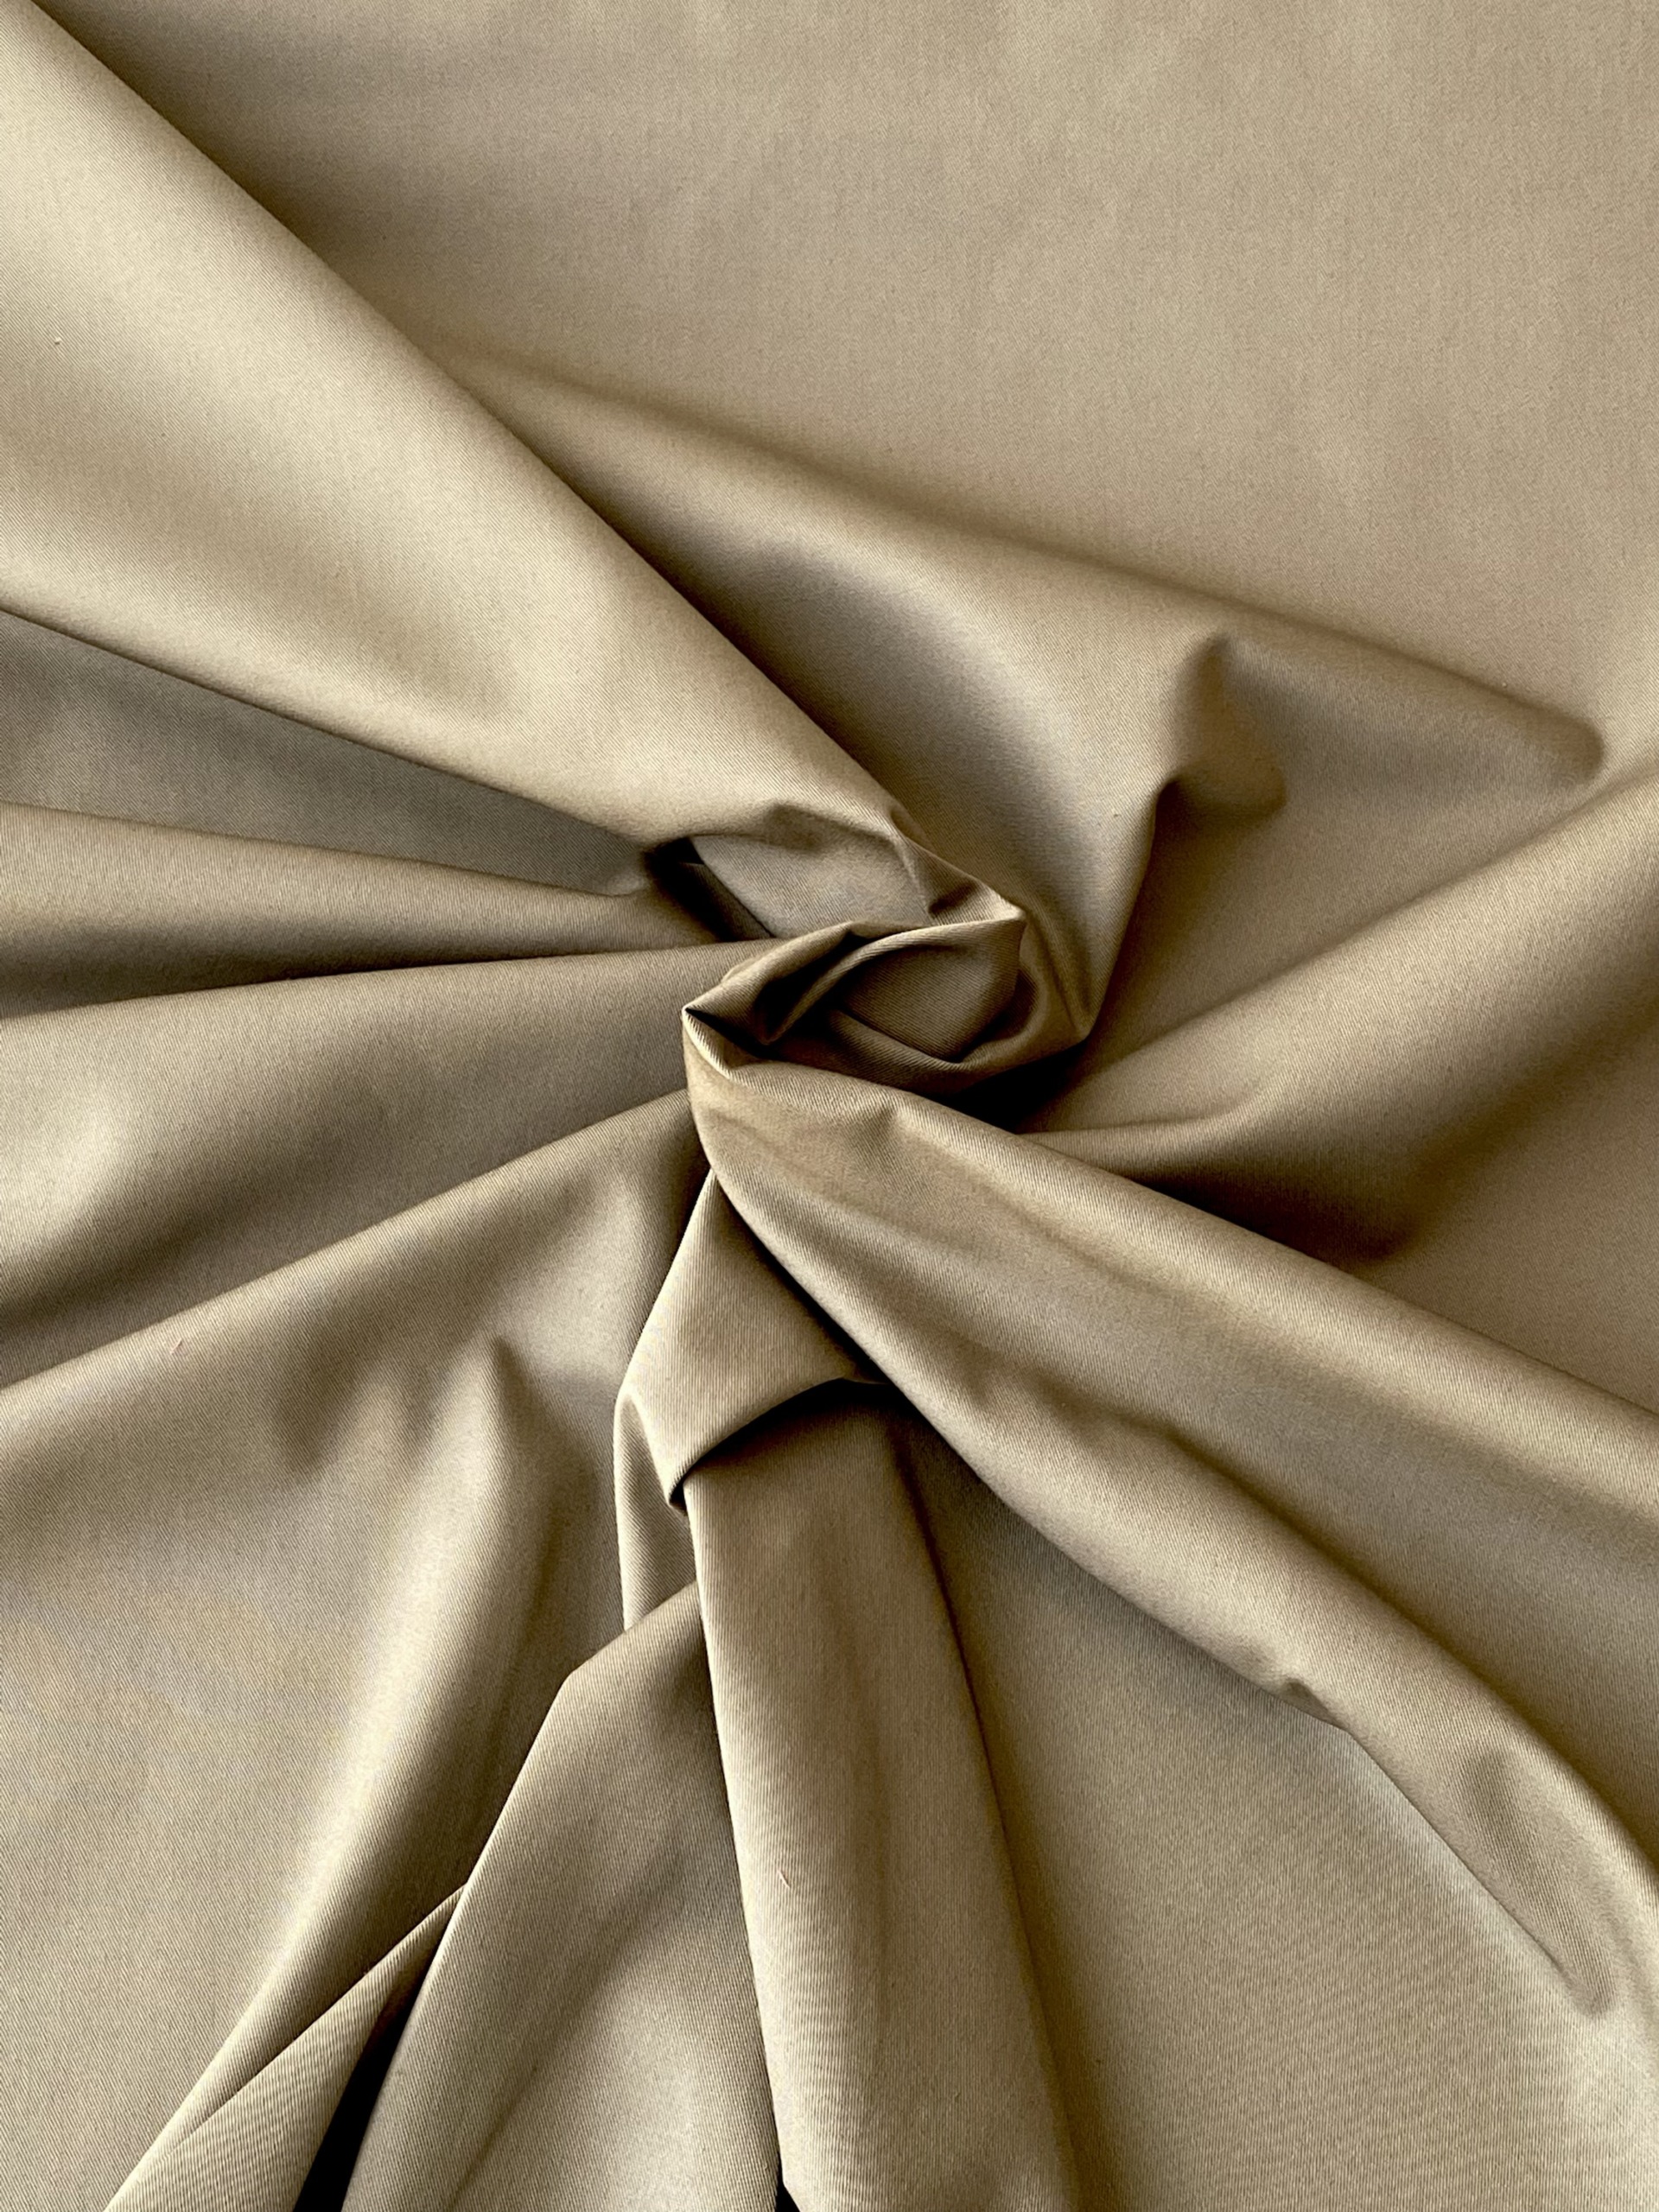 Khaki cotton gabardine fabric men's summer trouser fabric 150 cm